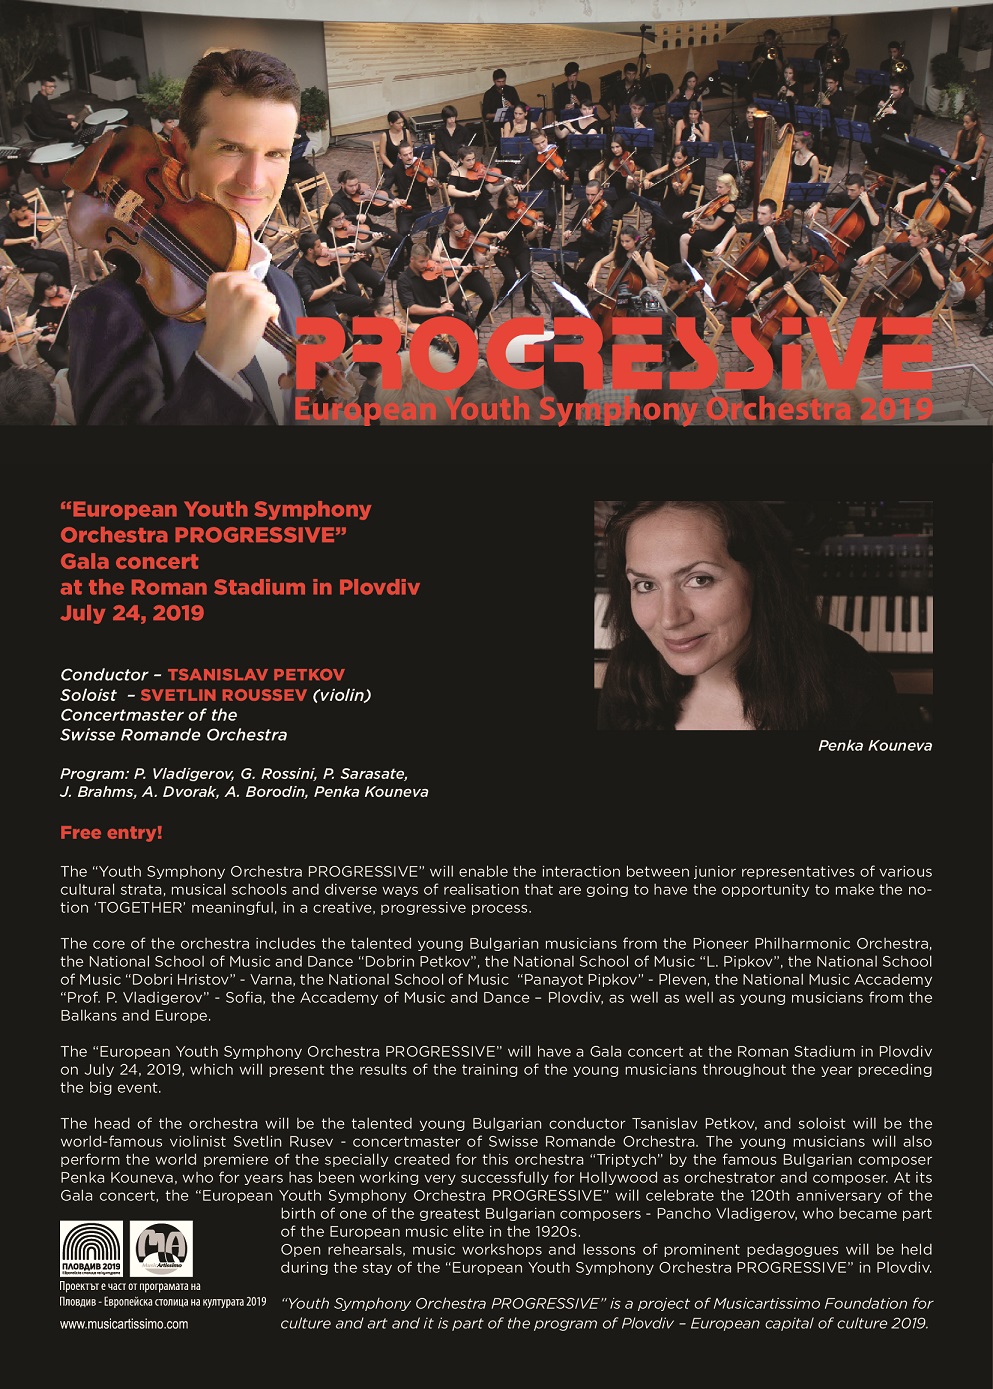 European Youth Symphony Orchestra Progressive flyer